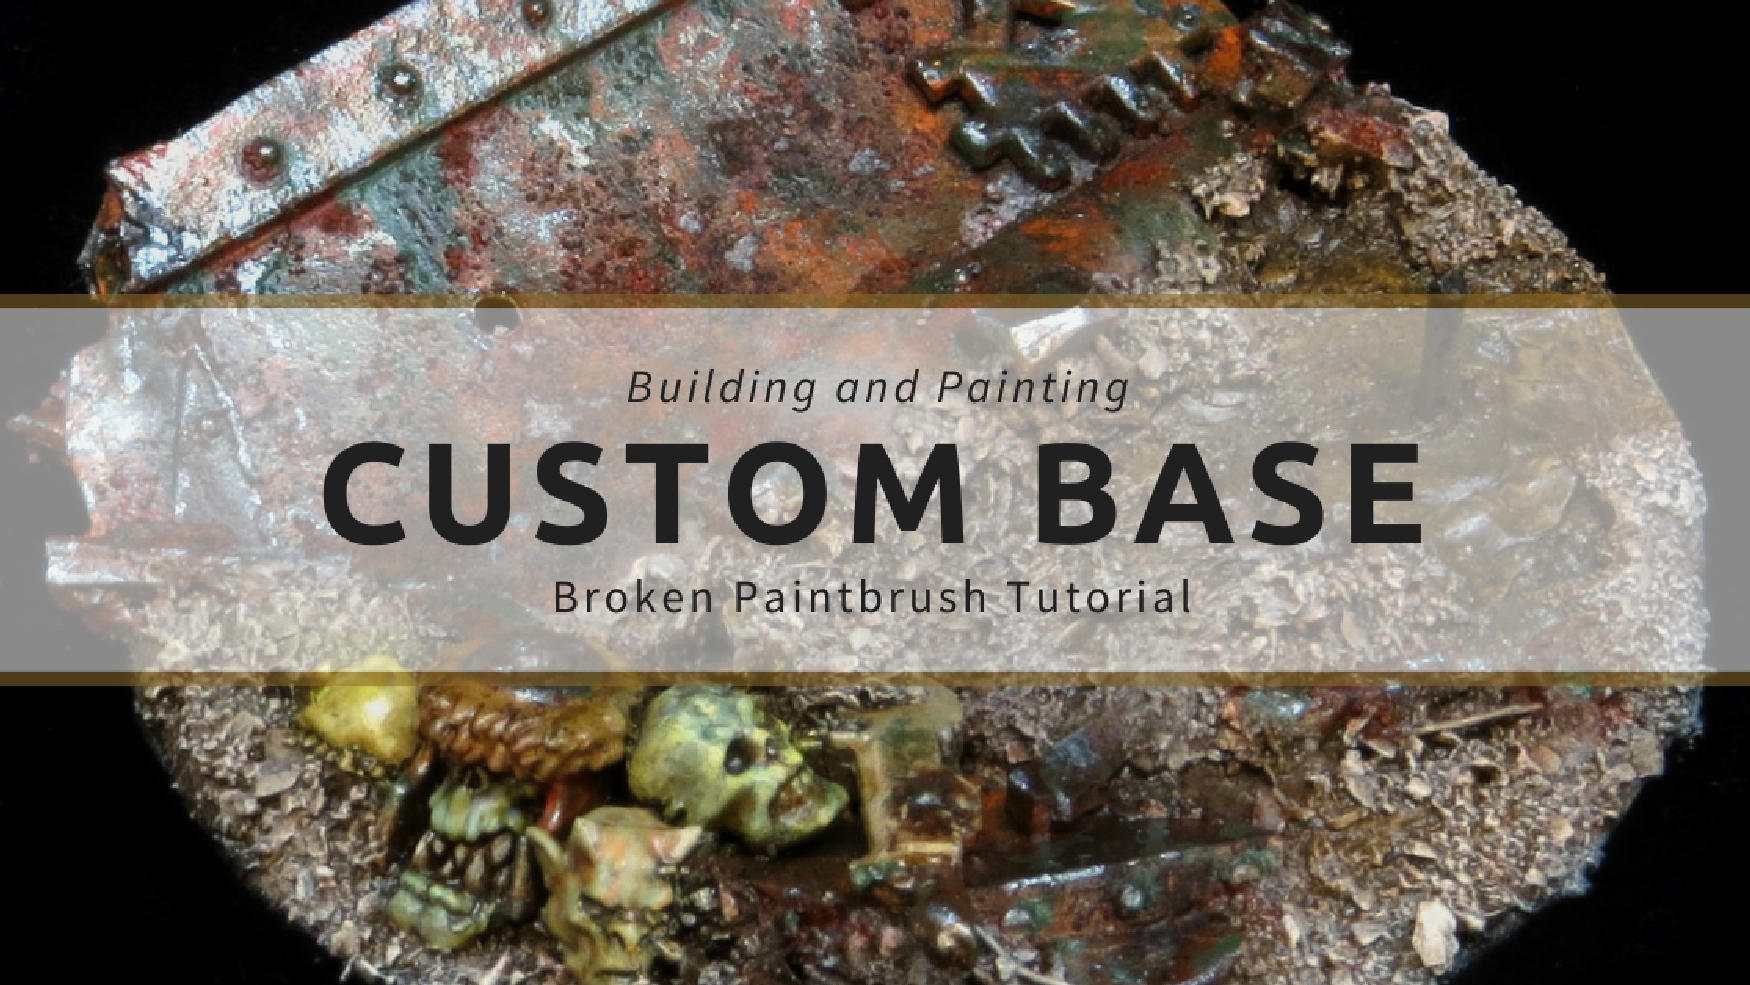 Build and Paint a Custom Base